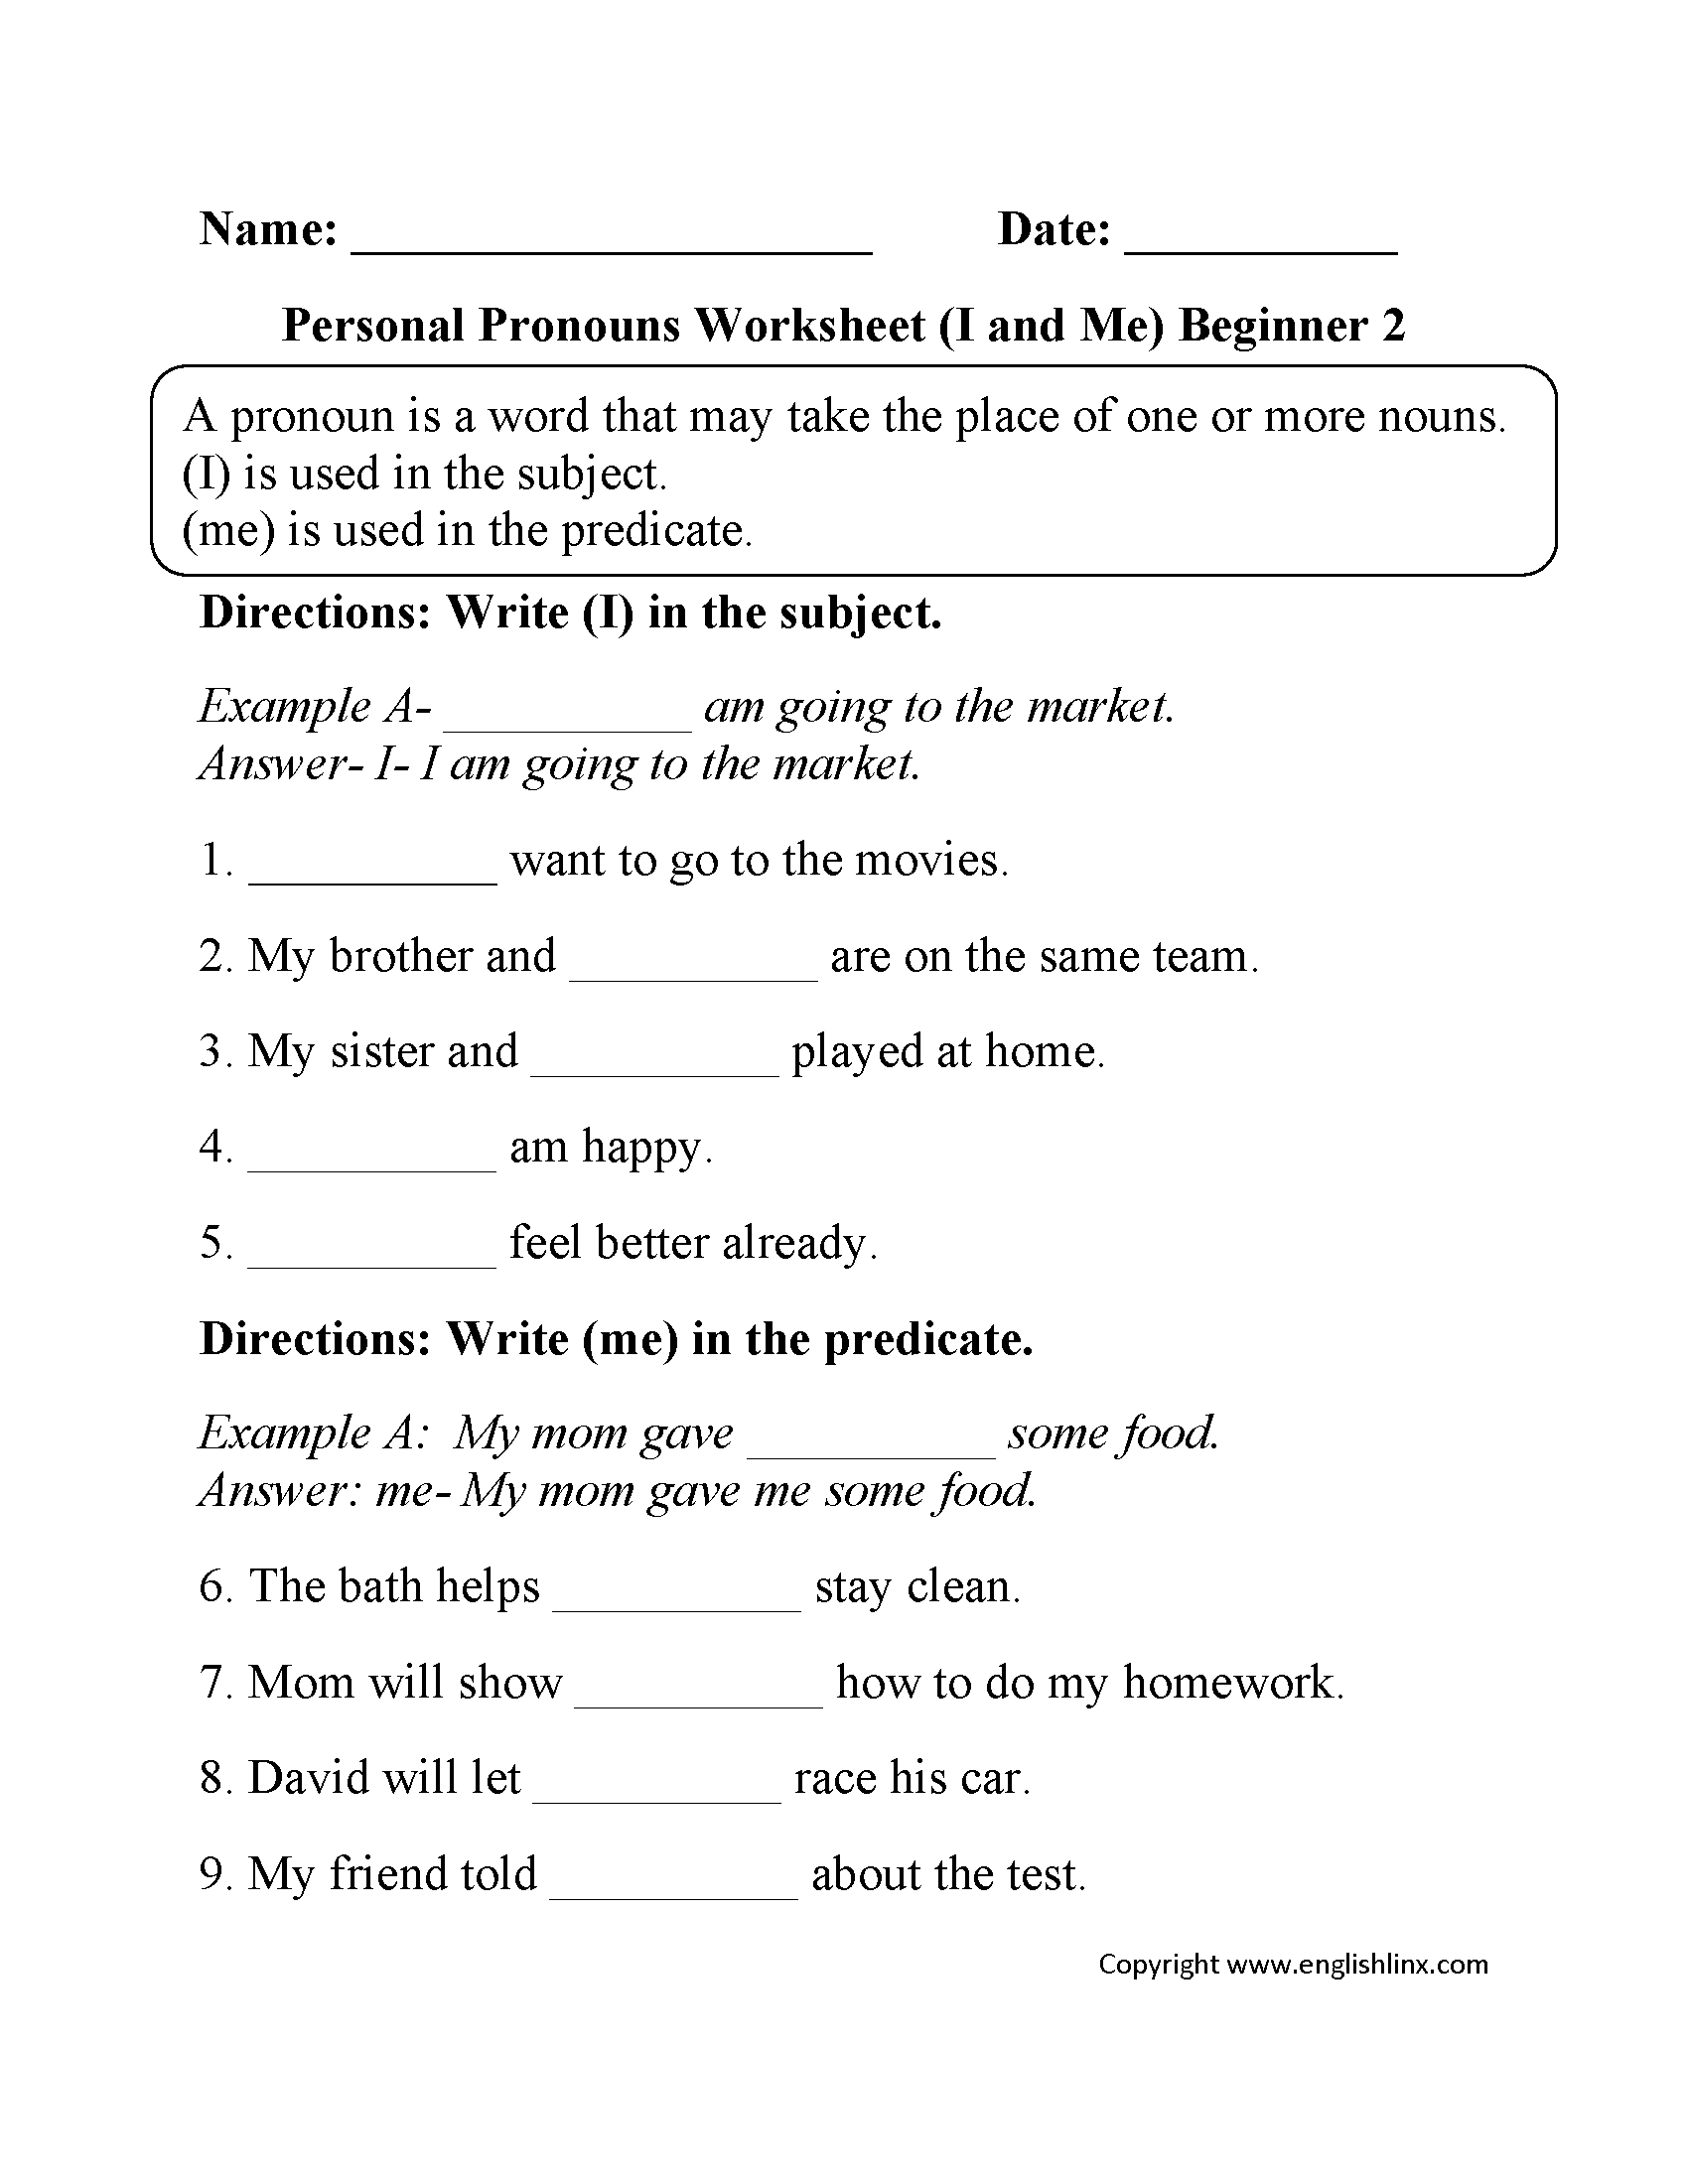 pronoun-practice-worksheets-db-excel